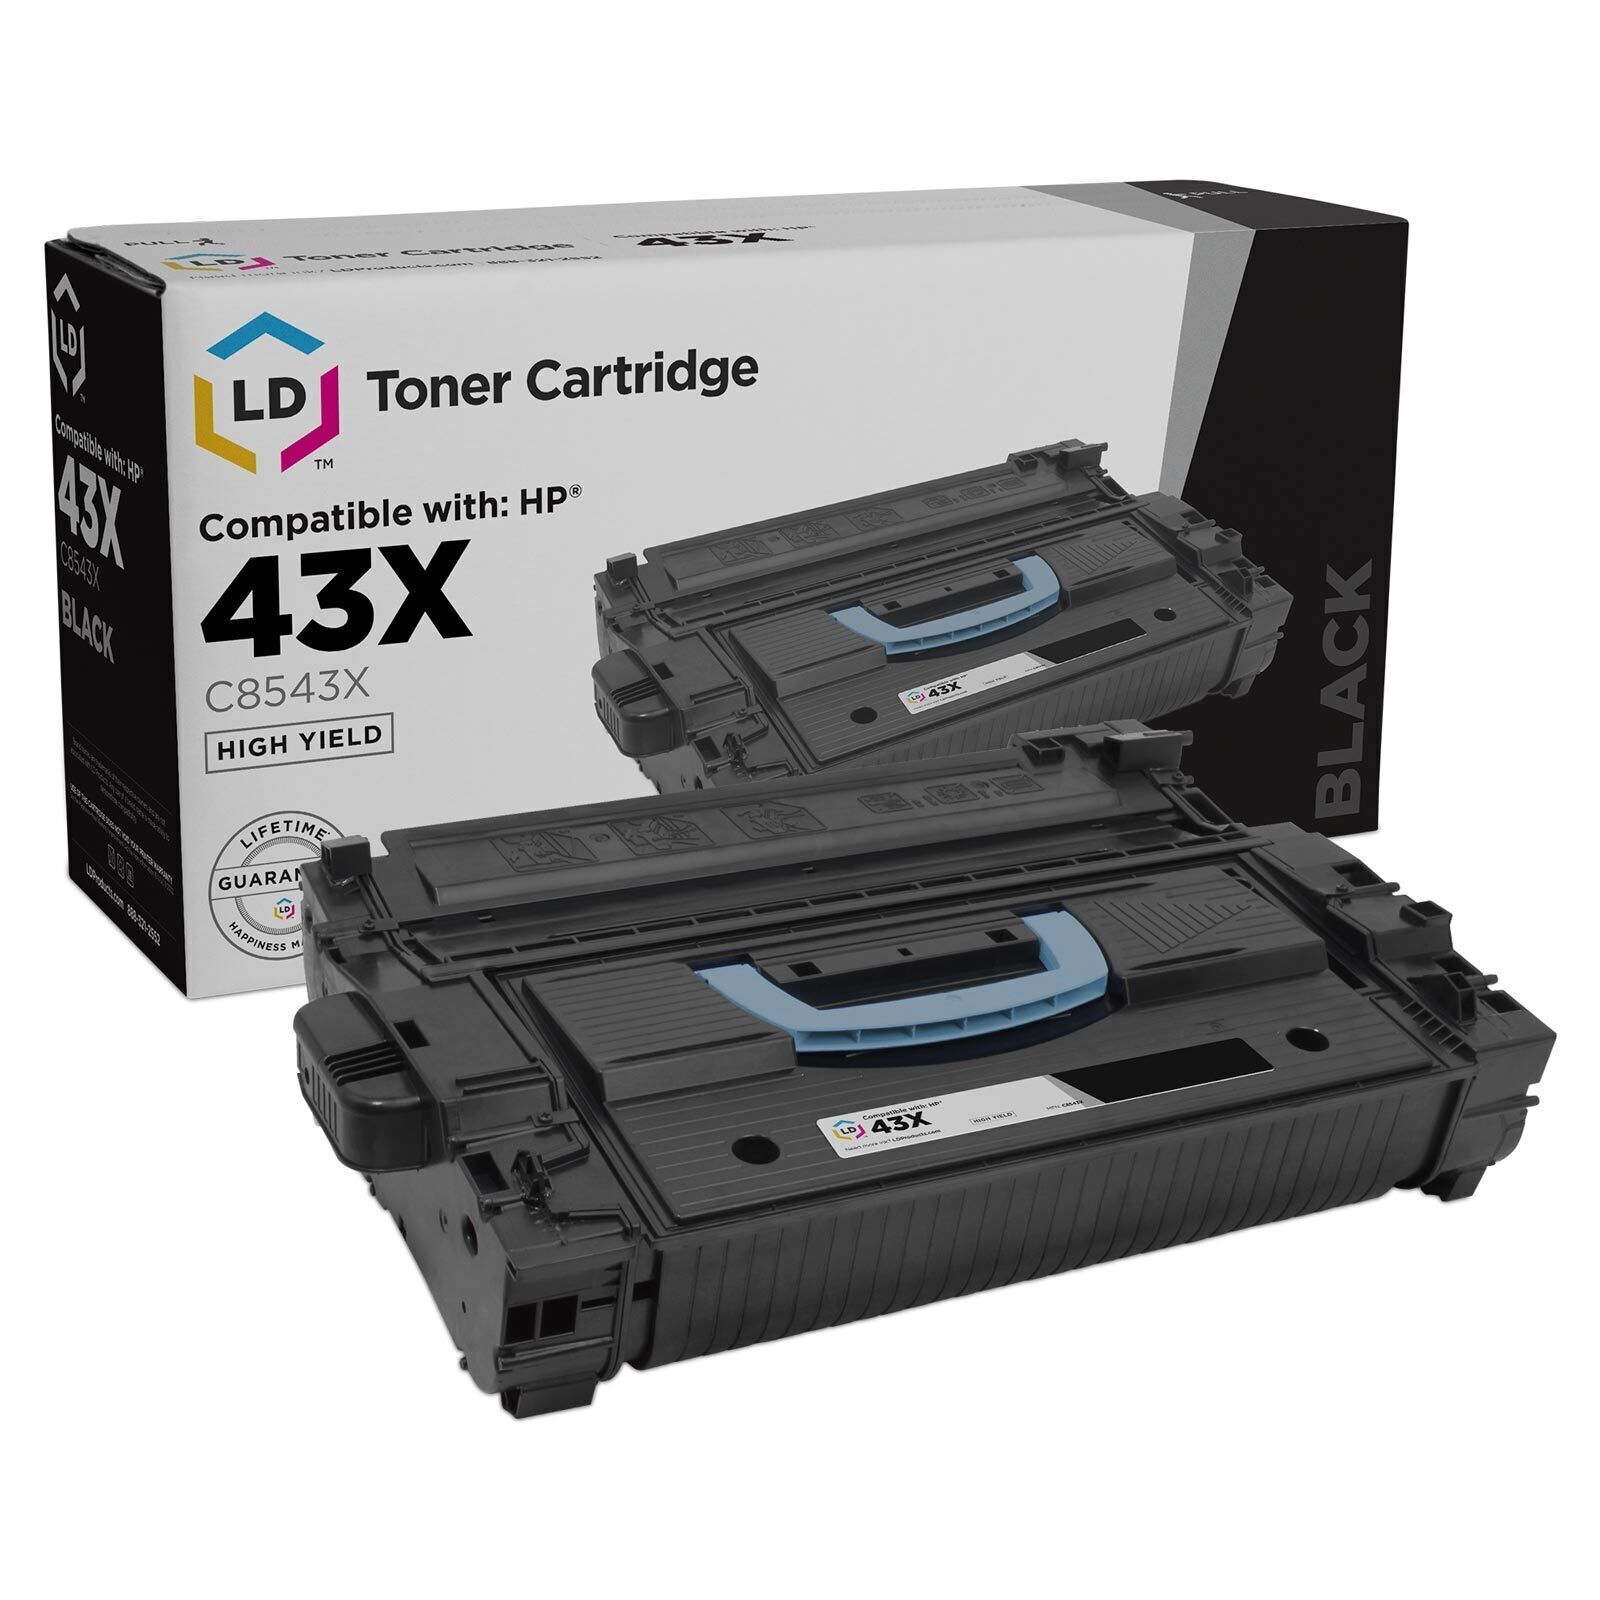 LD C8543X 43X Black Laser Toner Cartridge fits for HP 9000 9000dn 9000hdn M9050